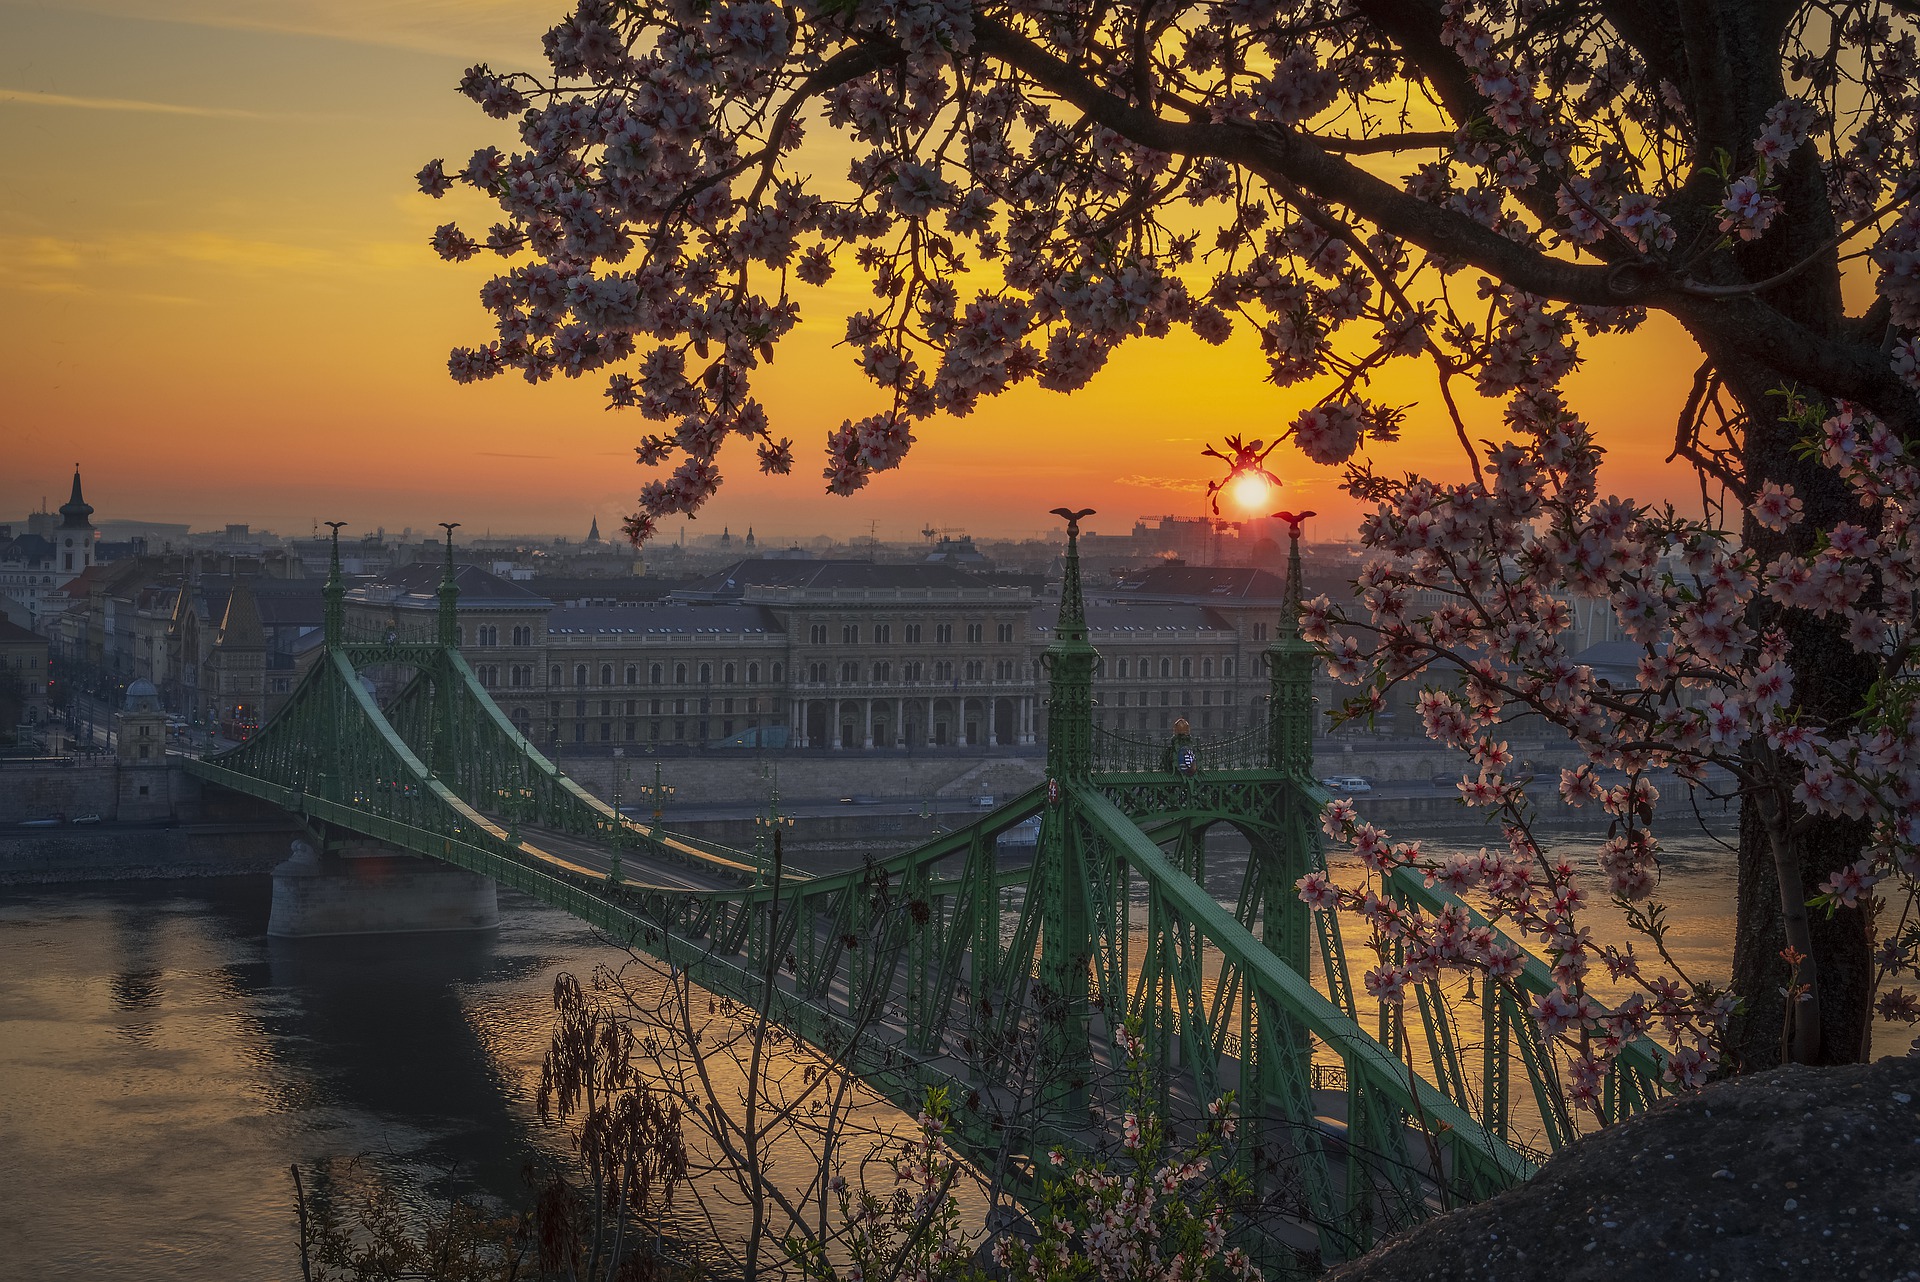 munkásszállás-Budapest_pic1